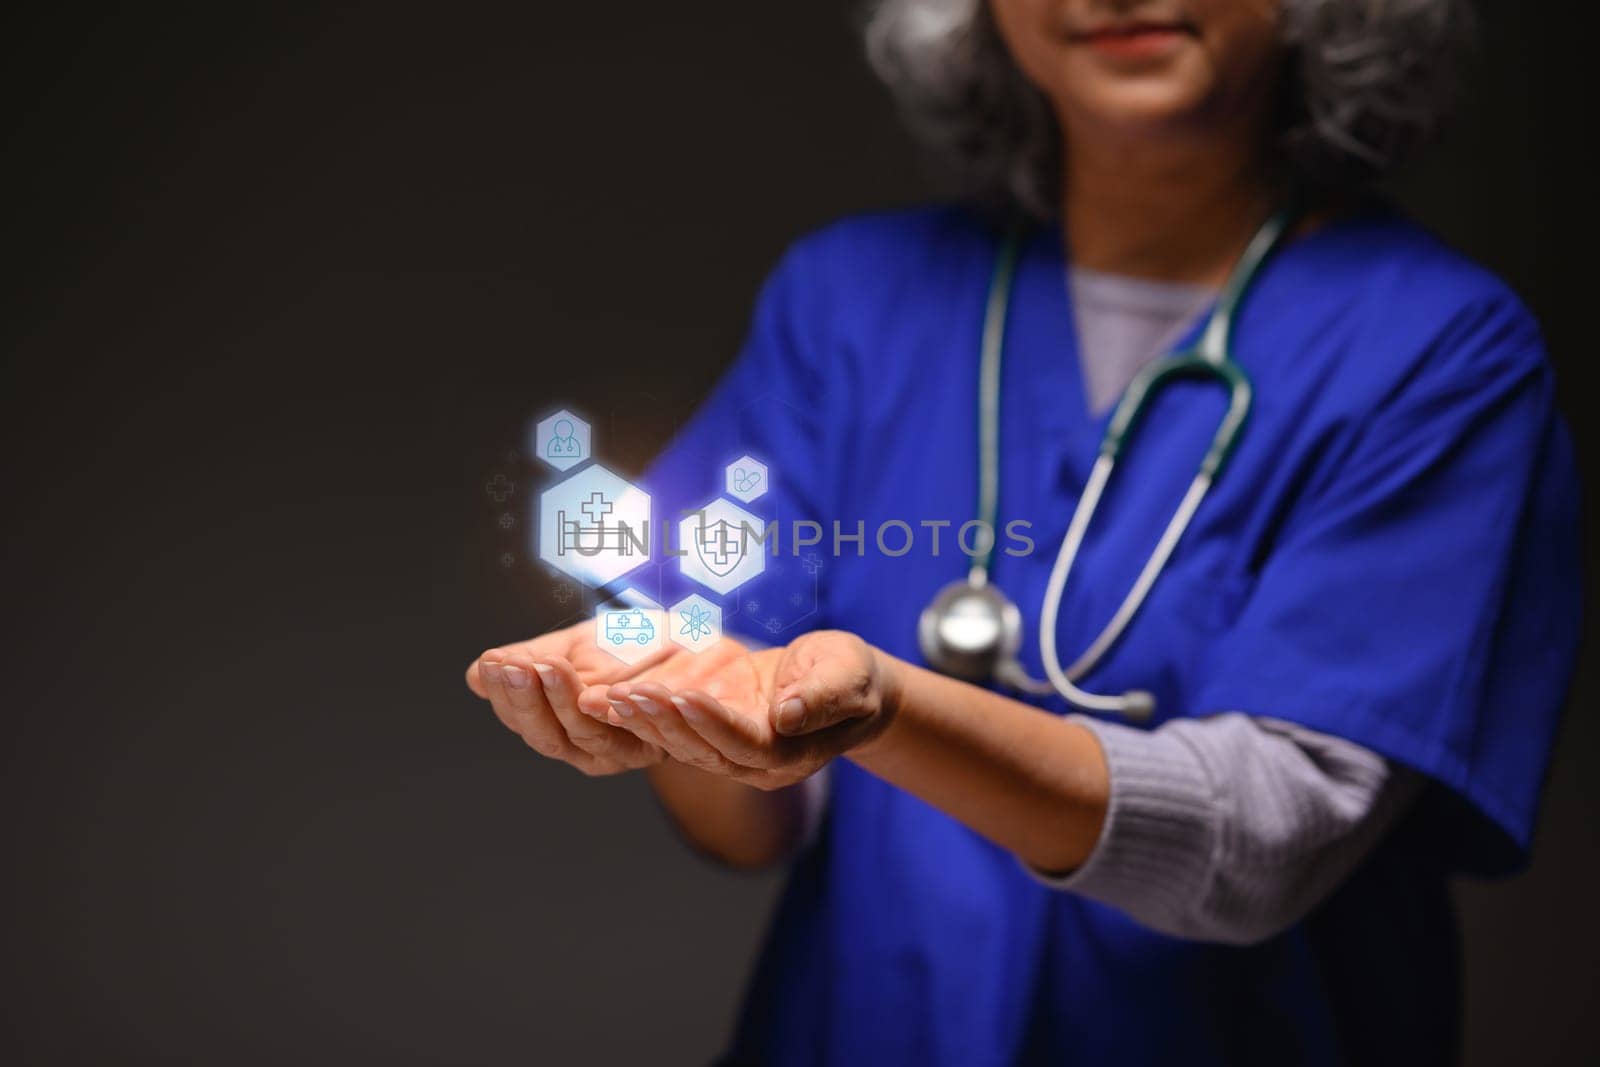 Modern medical icons over senior doctor hands. Medical innovative technology concept.